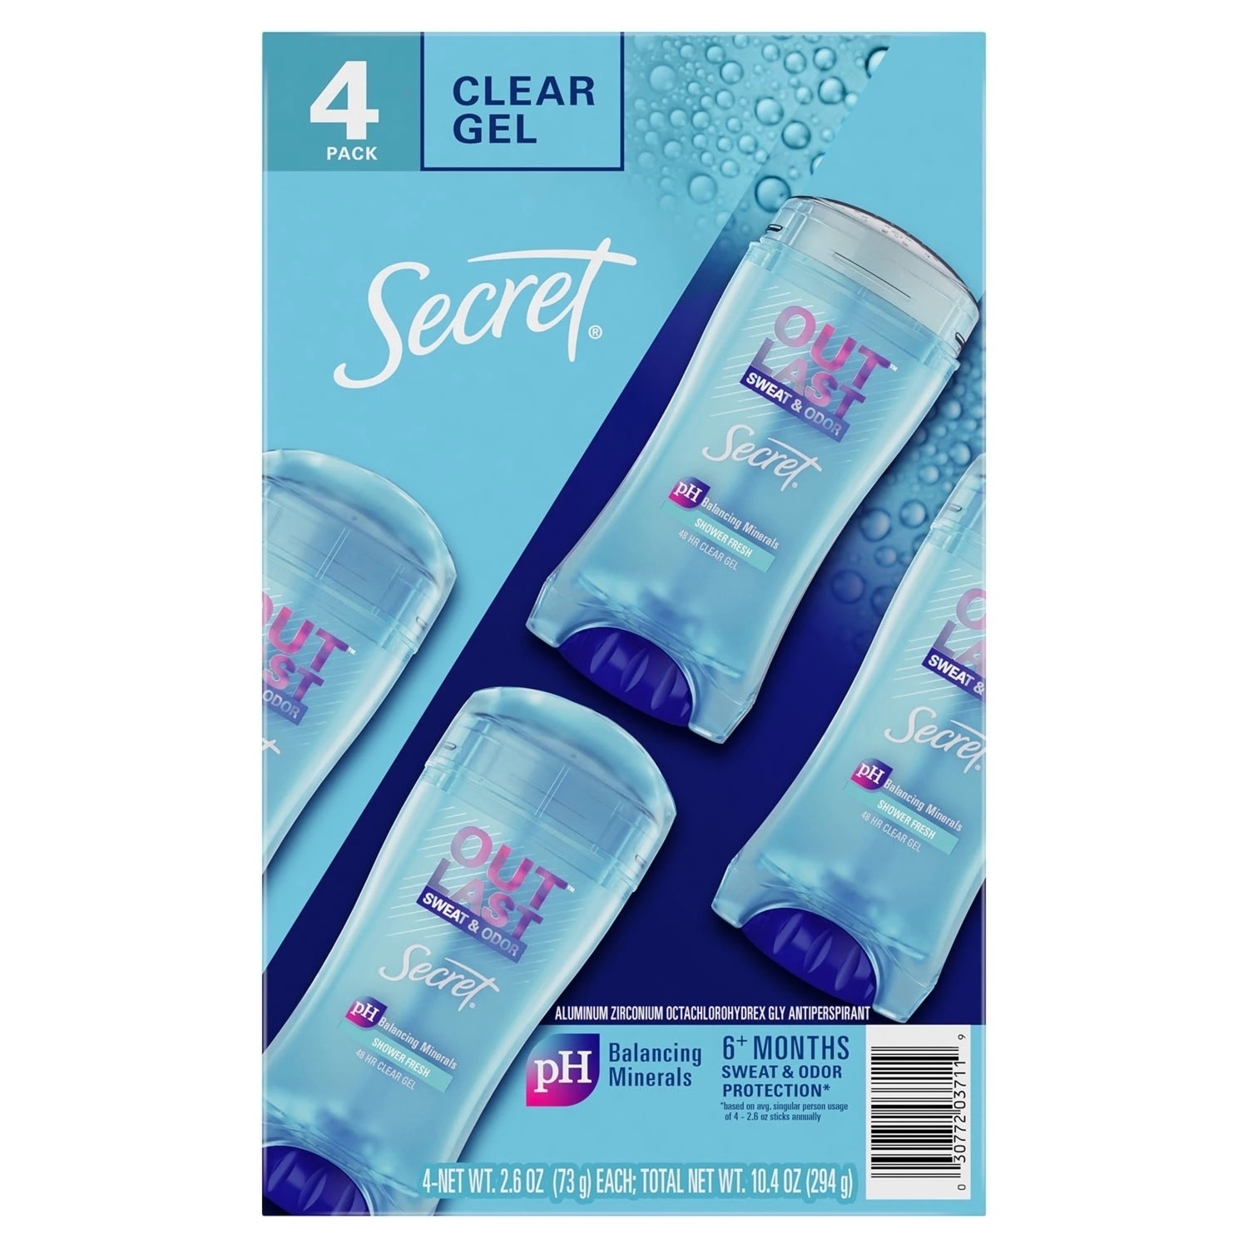 Secret Outlast Shower Fresh Clear Gel Deodorant, 2.6 Ounce (Pack Of 4)